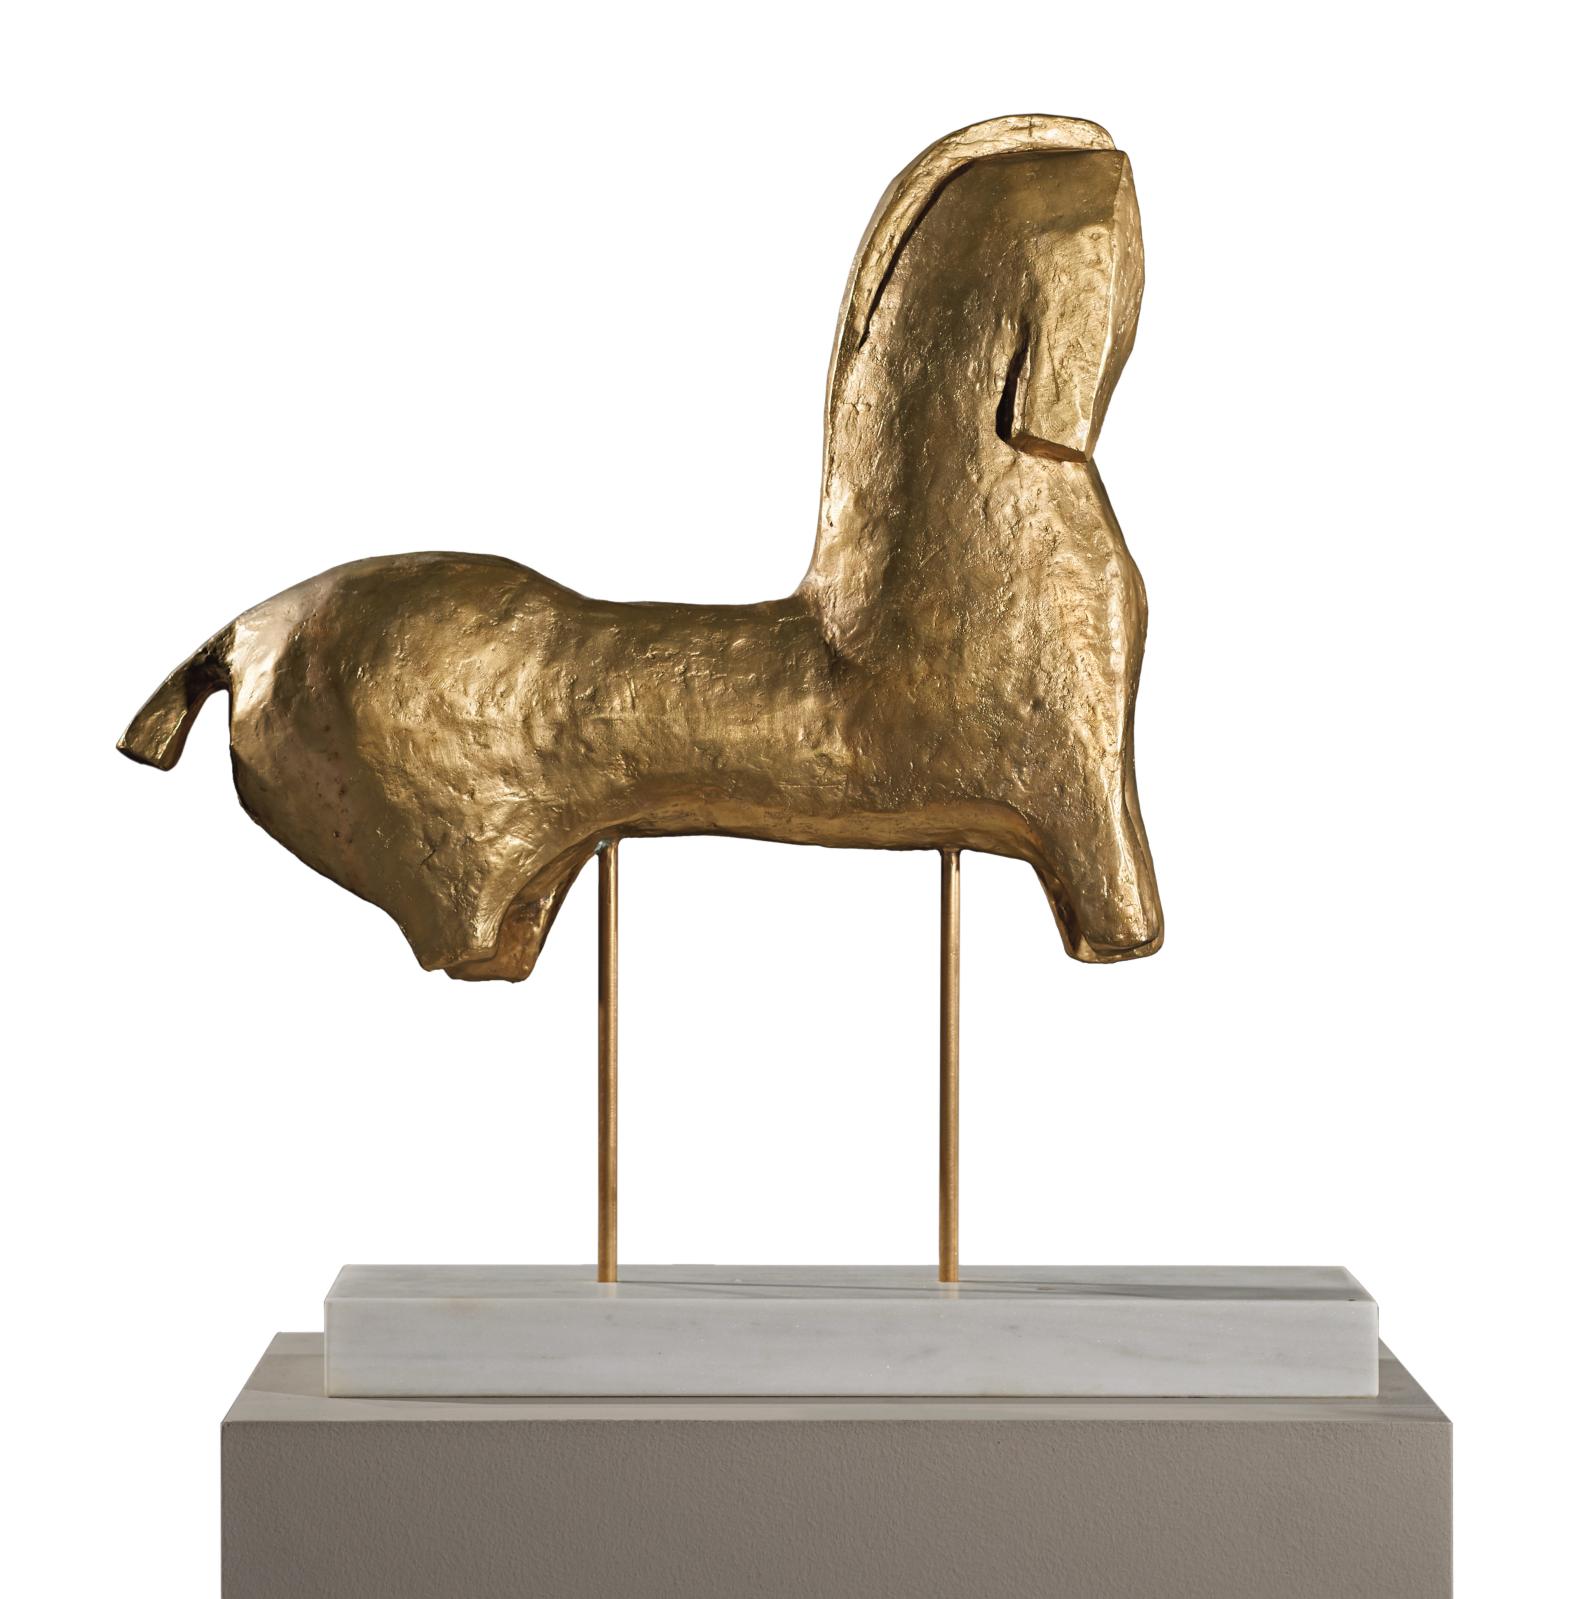 Aspasia Papadoperakis (née en 1942), Cheval d’Apollo, 1989, bronze, 55 x 68 x 280 cm. 